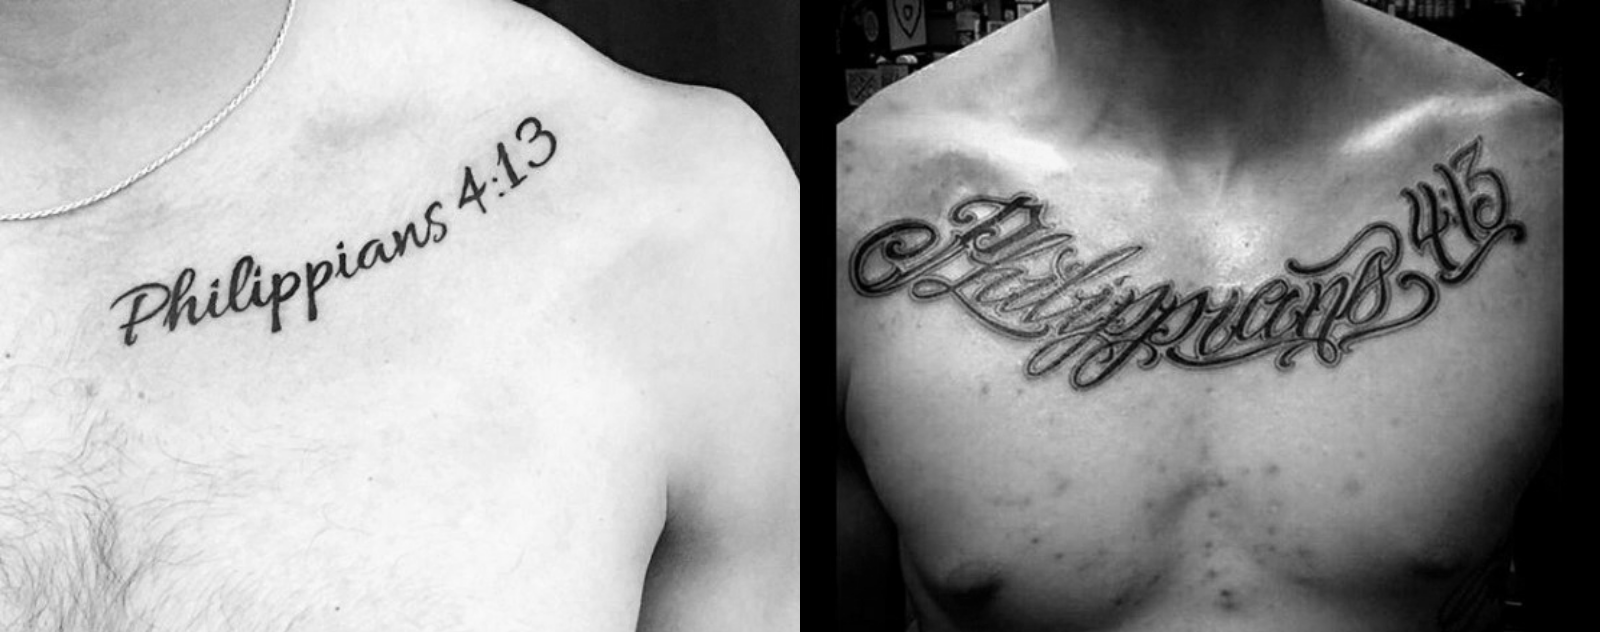 philippians-4-13-tattoo-chest-3